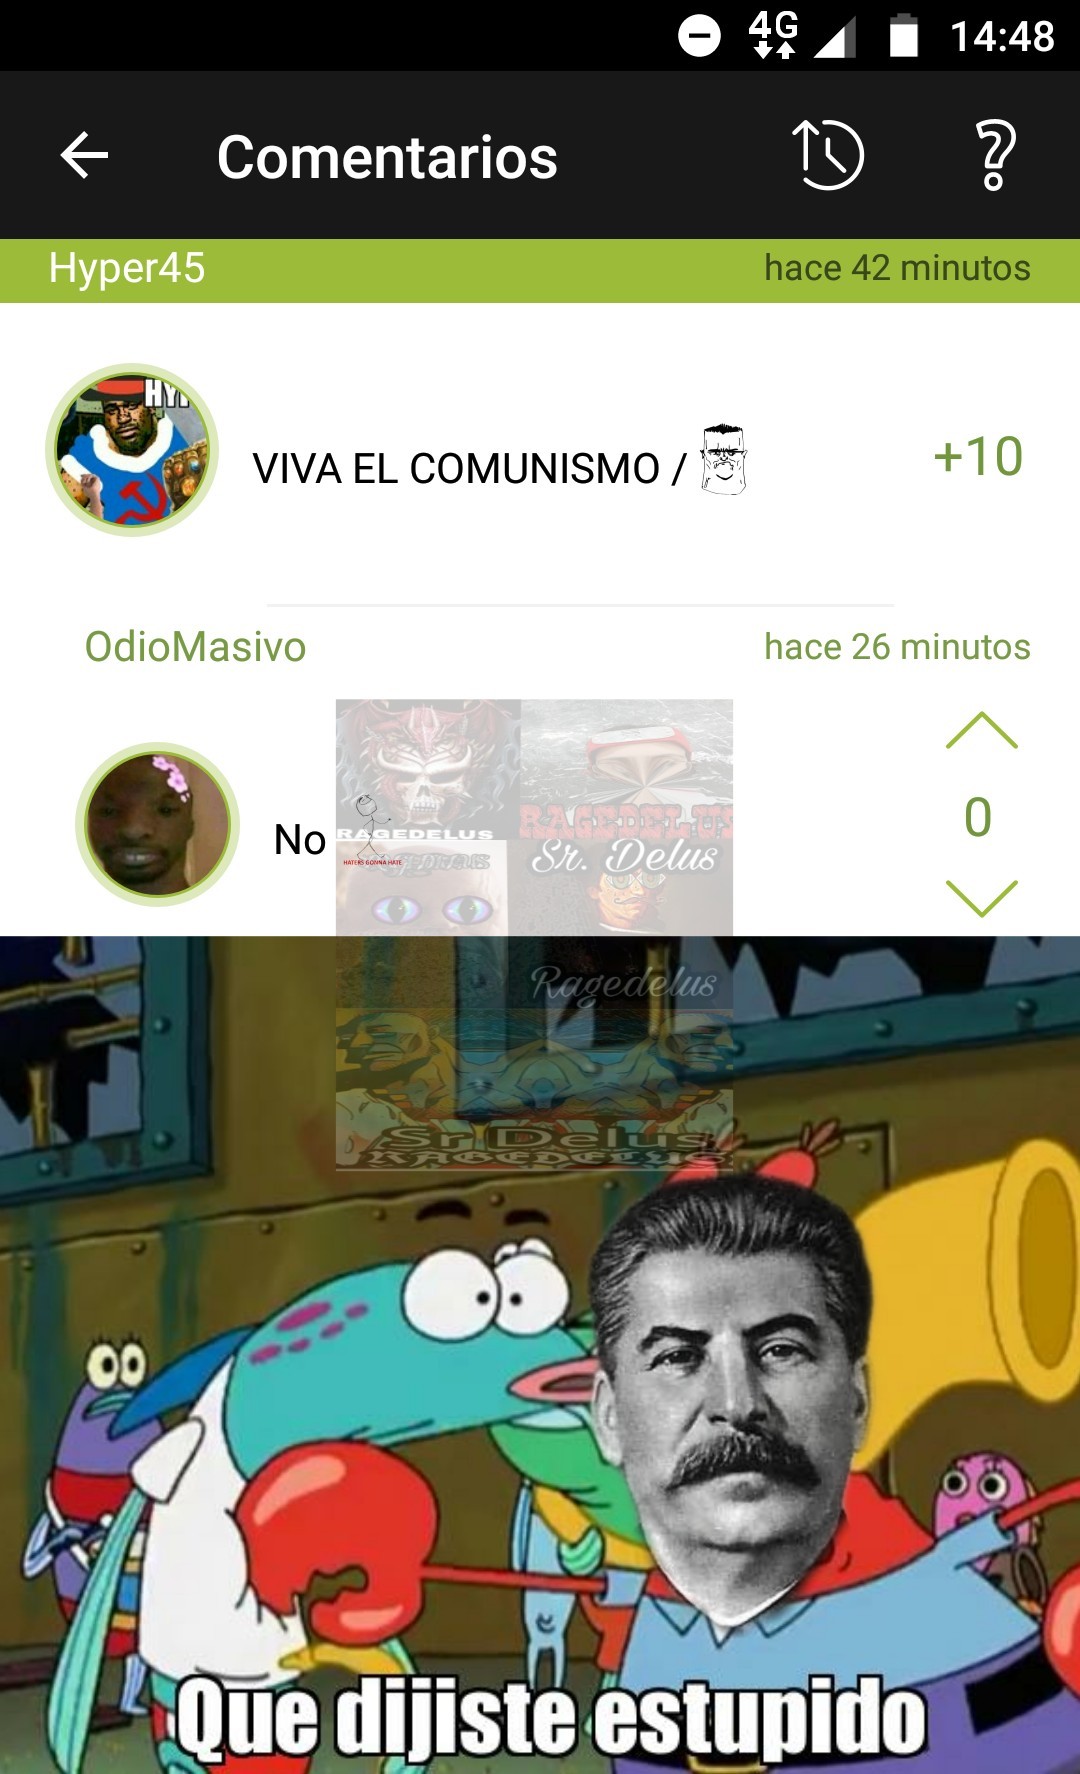 El meme es comunista